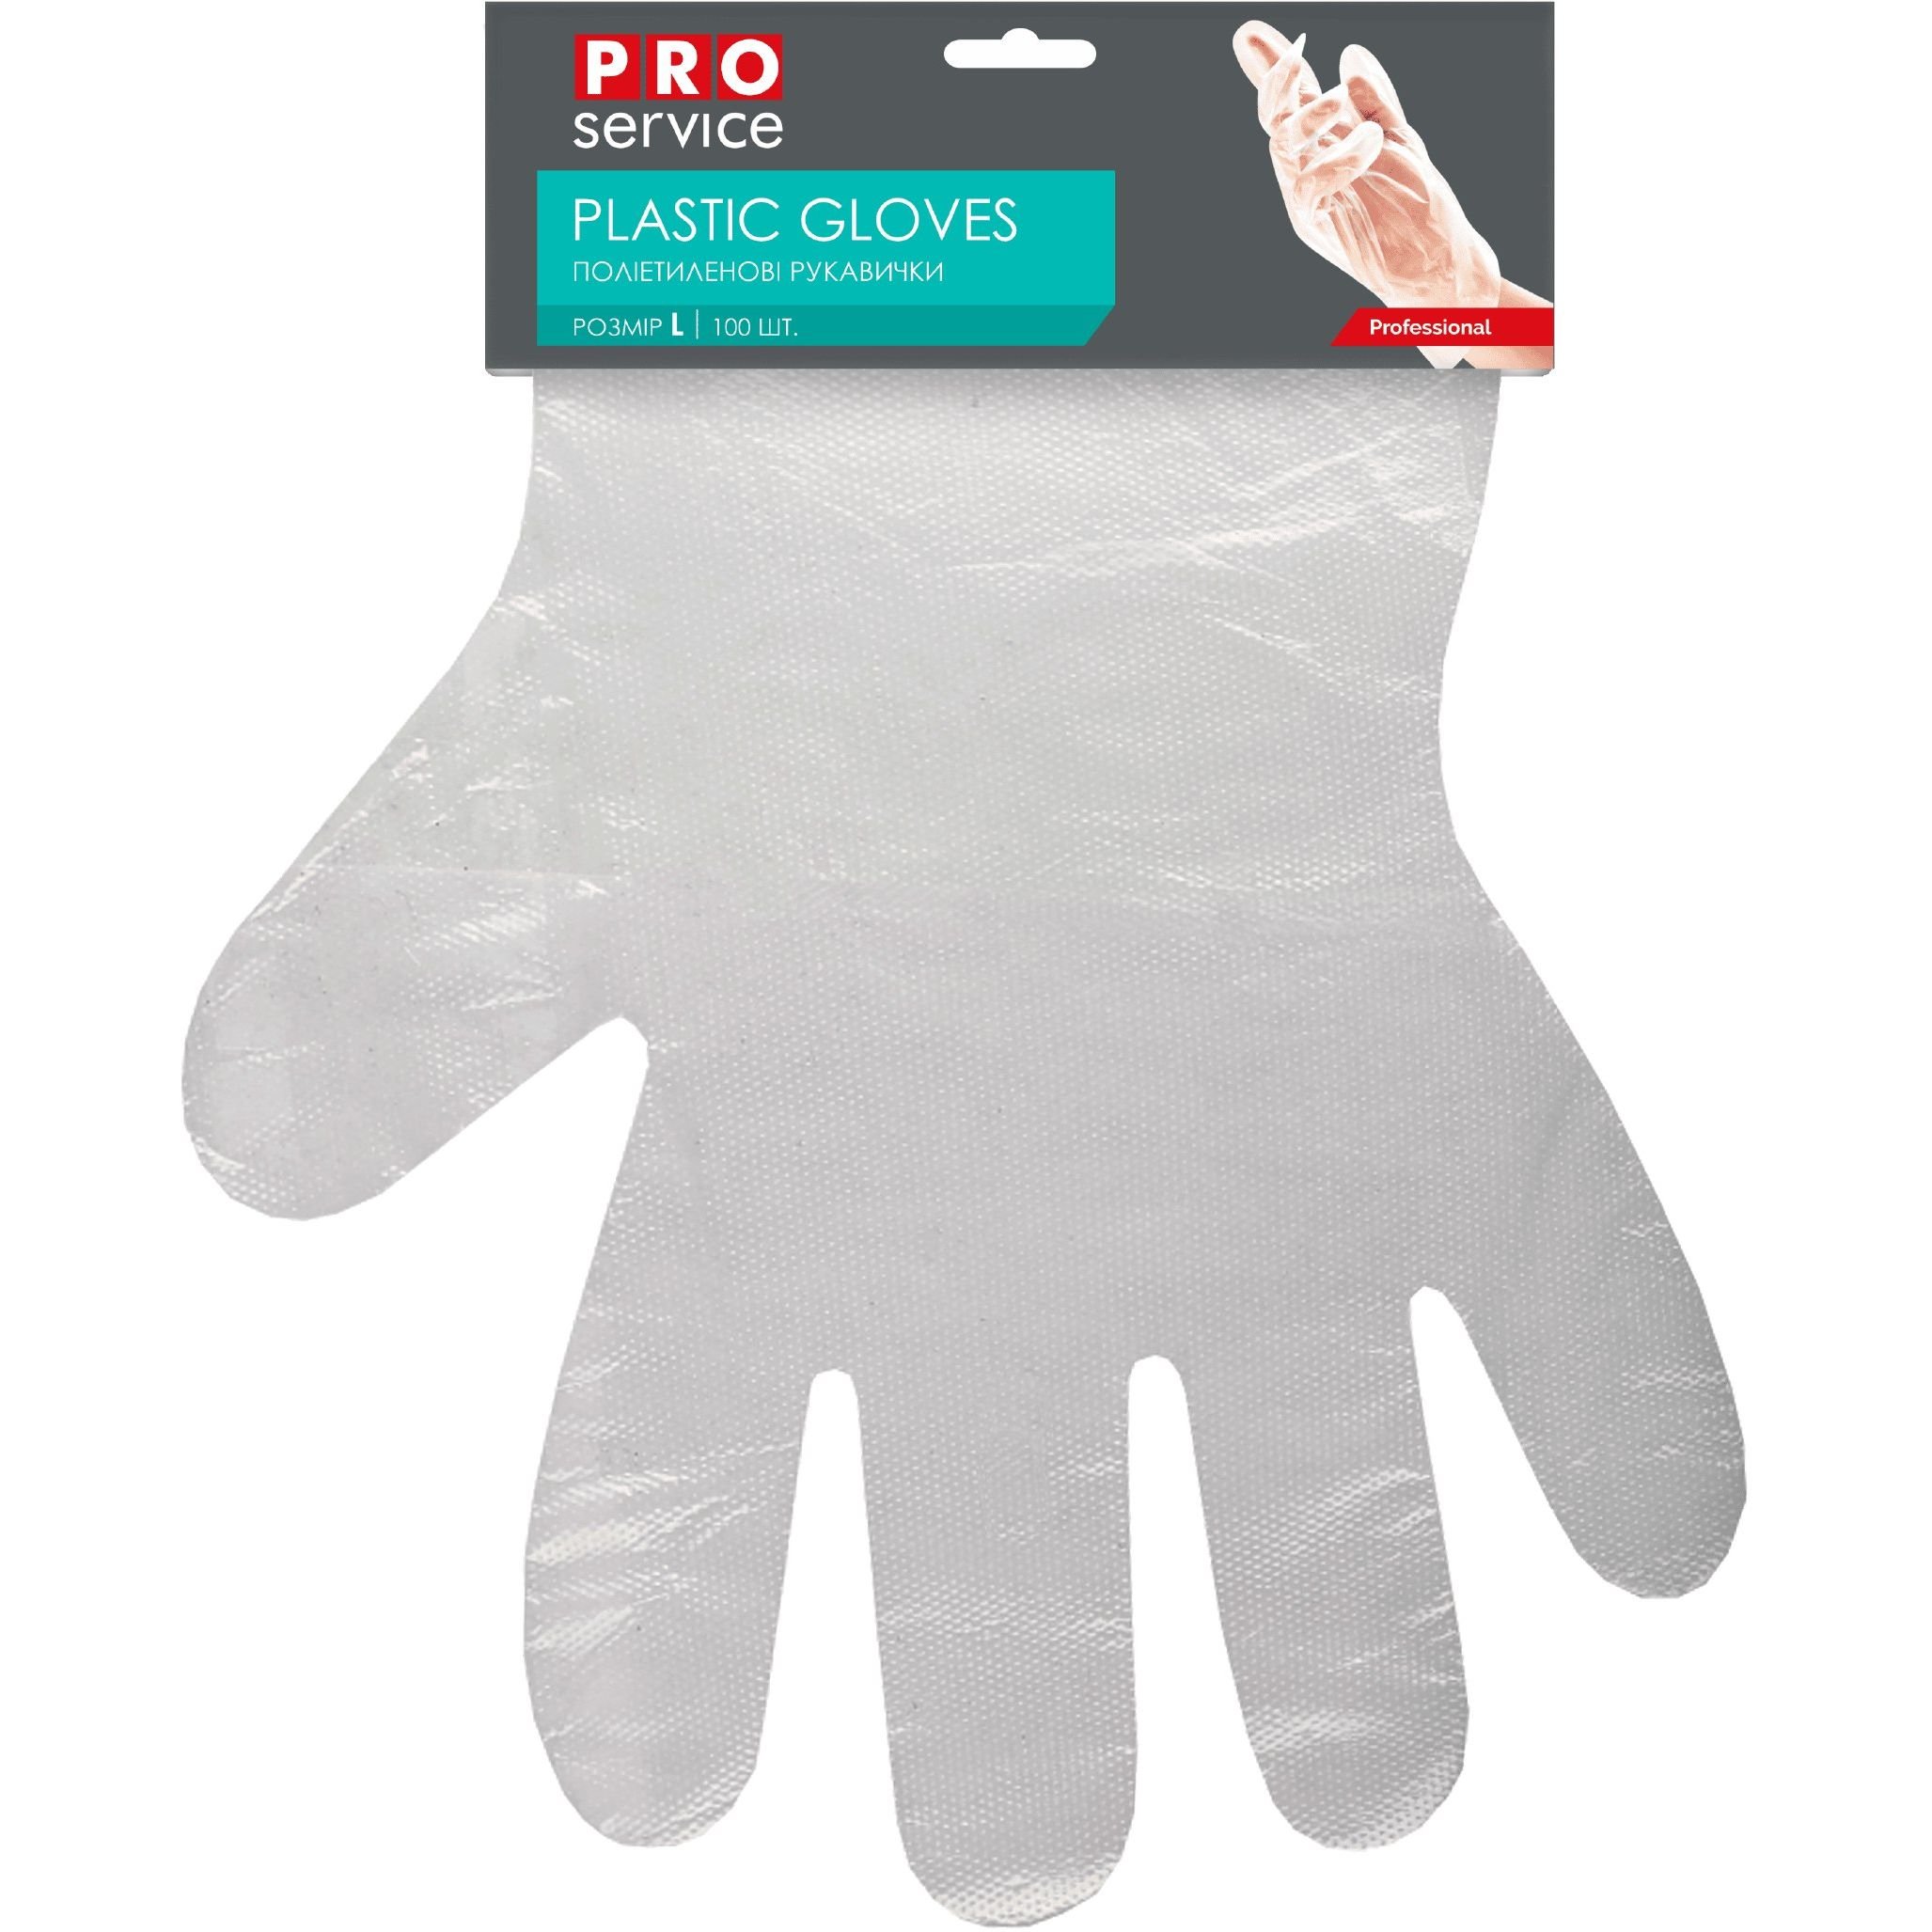 Перчатки одноразовые PRO service Professional, на планке, 100 шт. (17500502) - фото 1